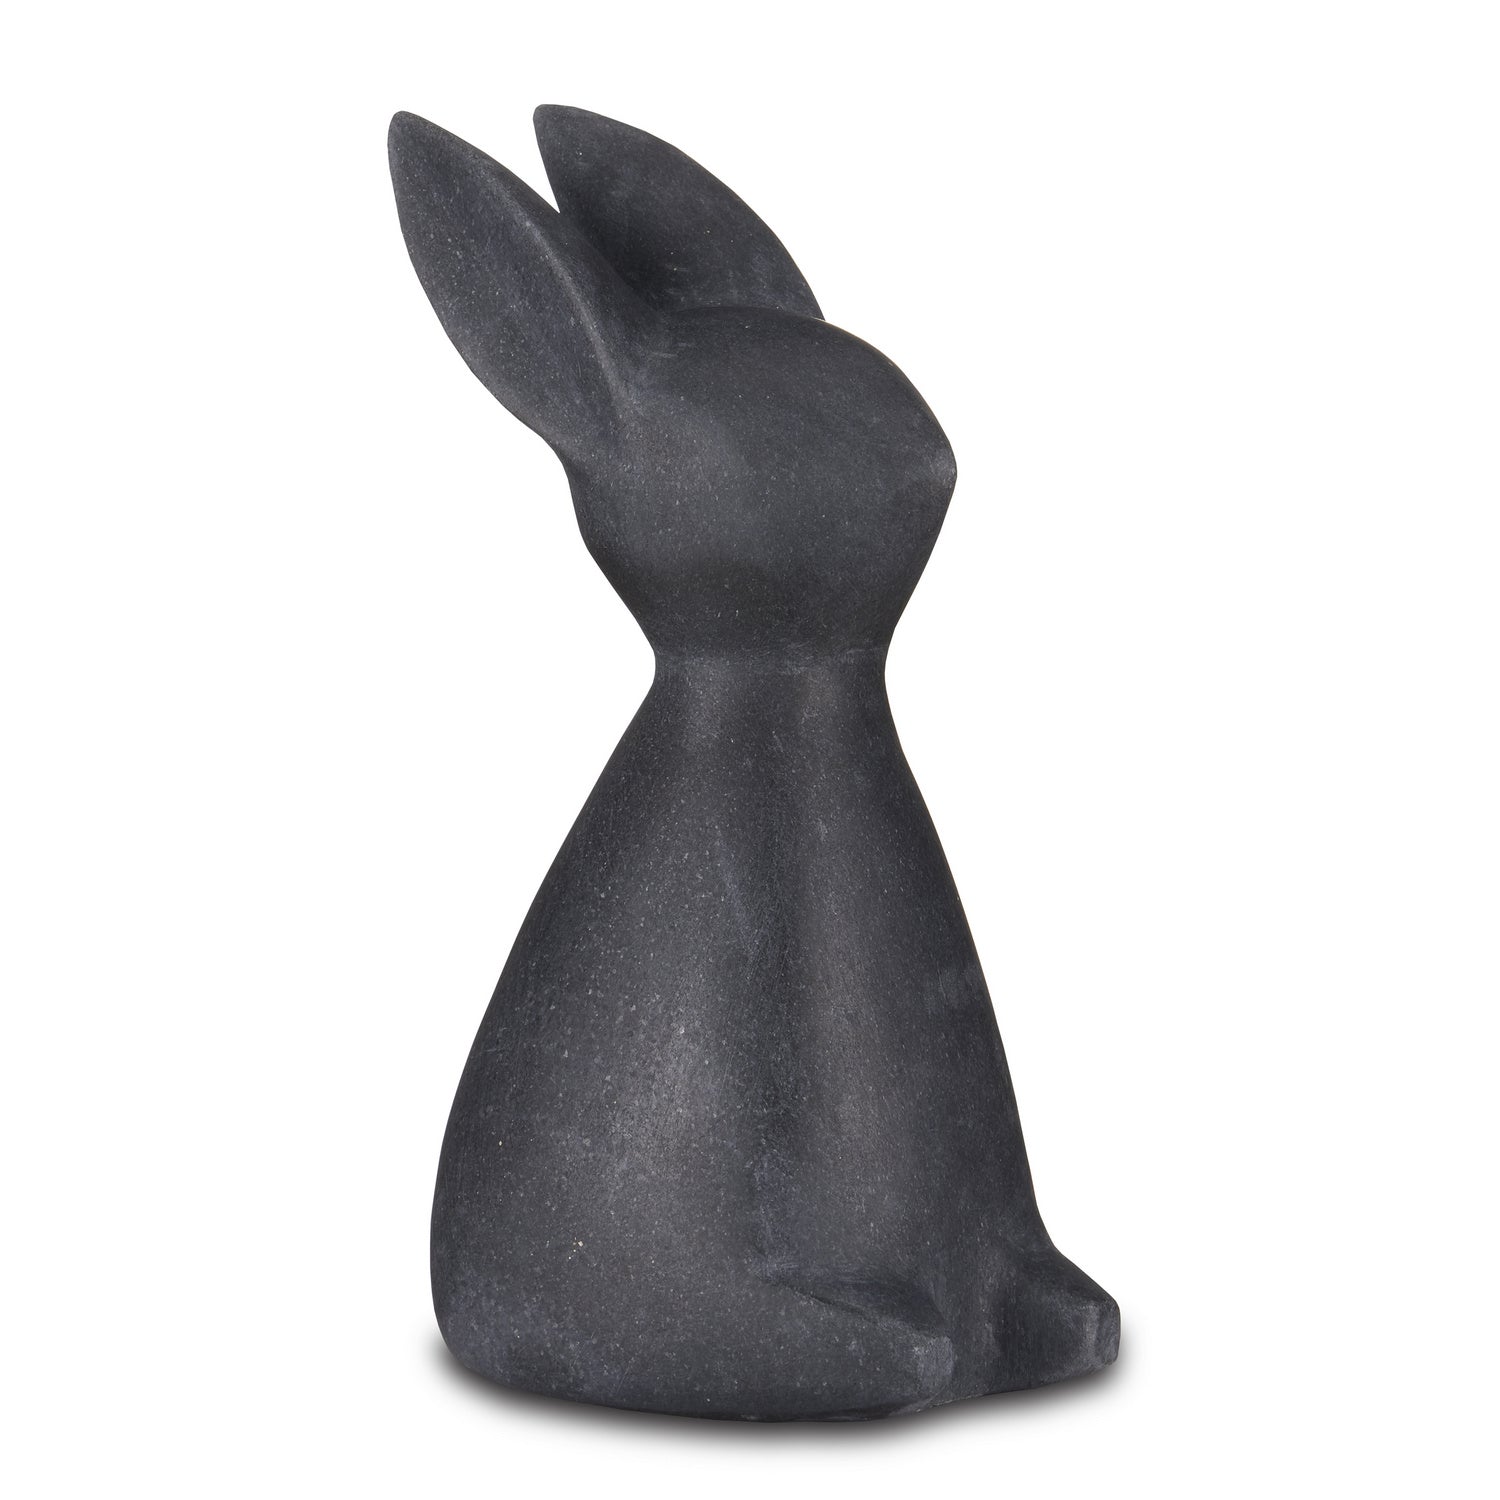 Rabbit in Black finish